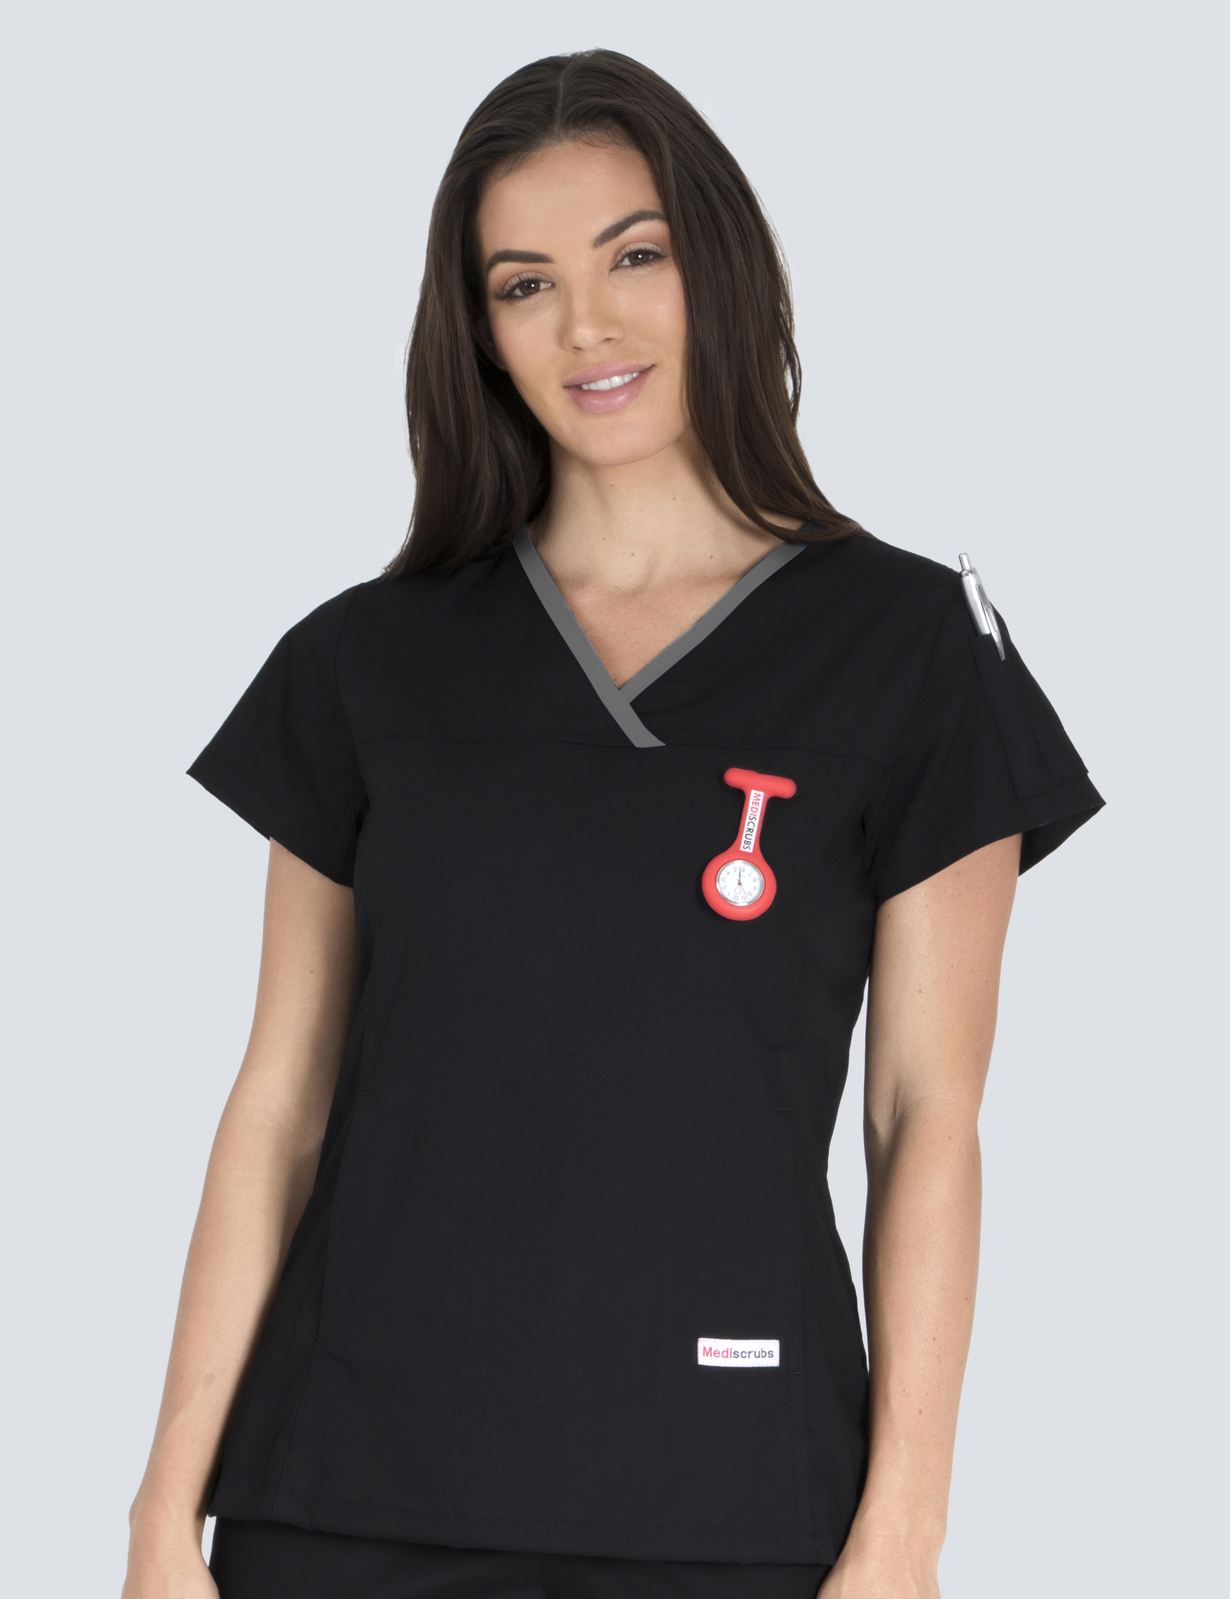 Launceston General Hospital - Medical Imaging - Radiographer- With Trim - Women's Fit X 3 Logos Bundle